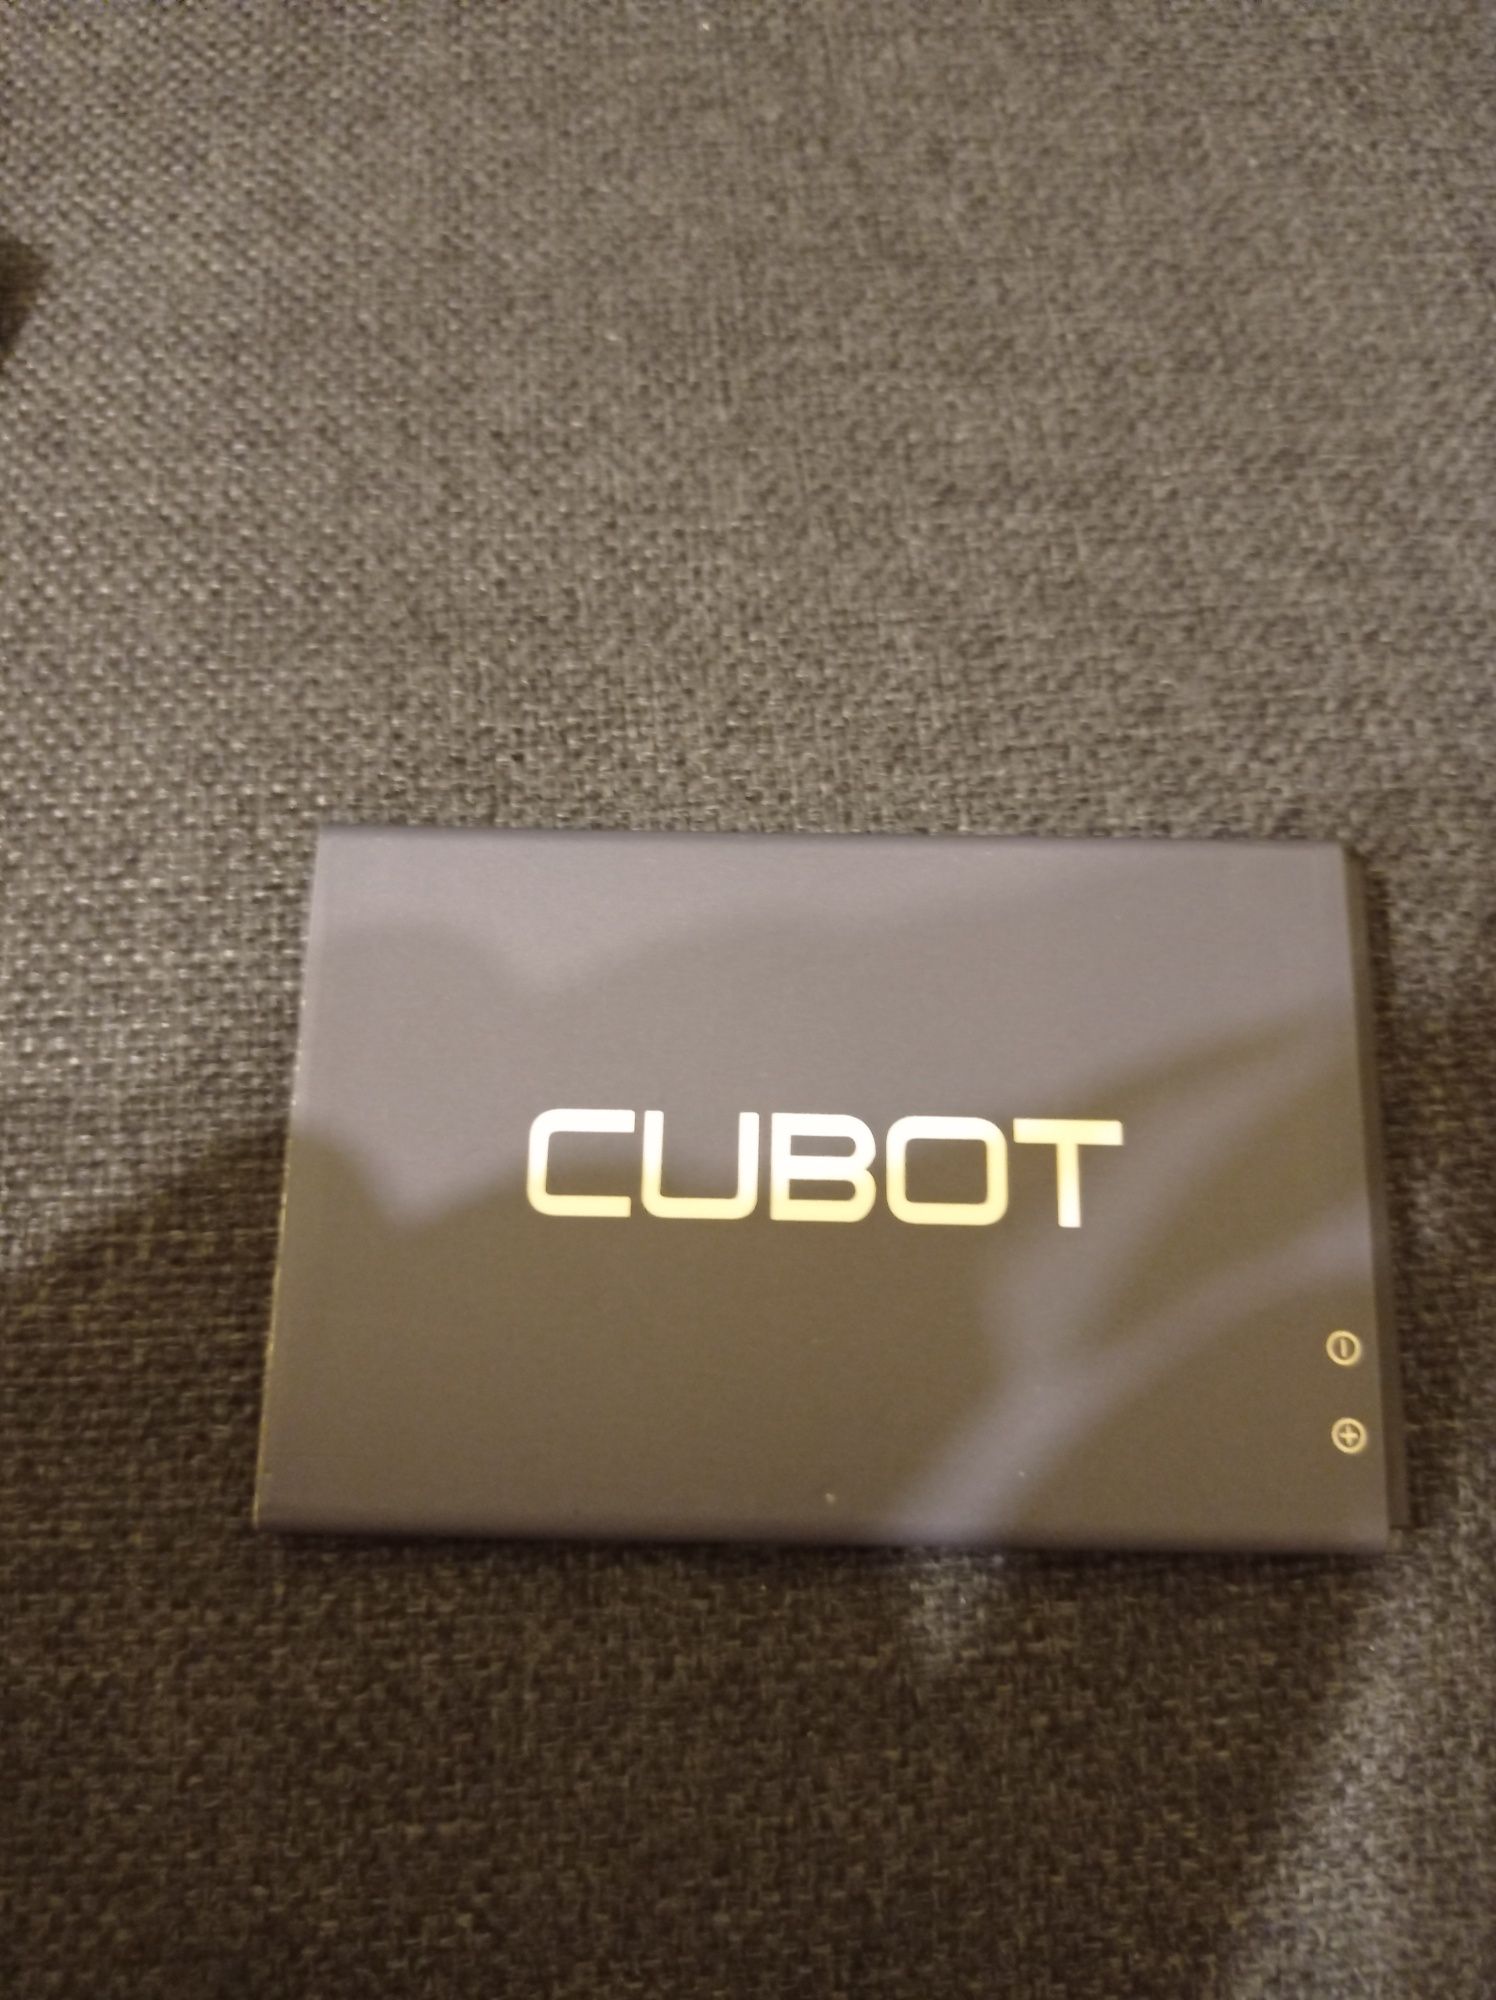 Bateria Rainbow CUBOT 3,8V 2200 mAh